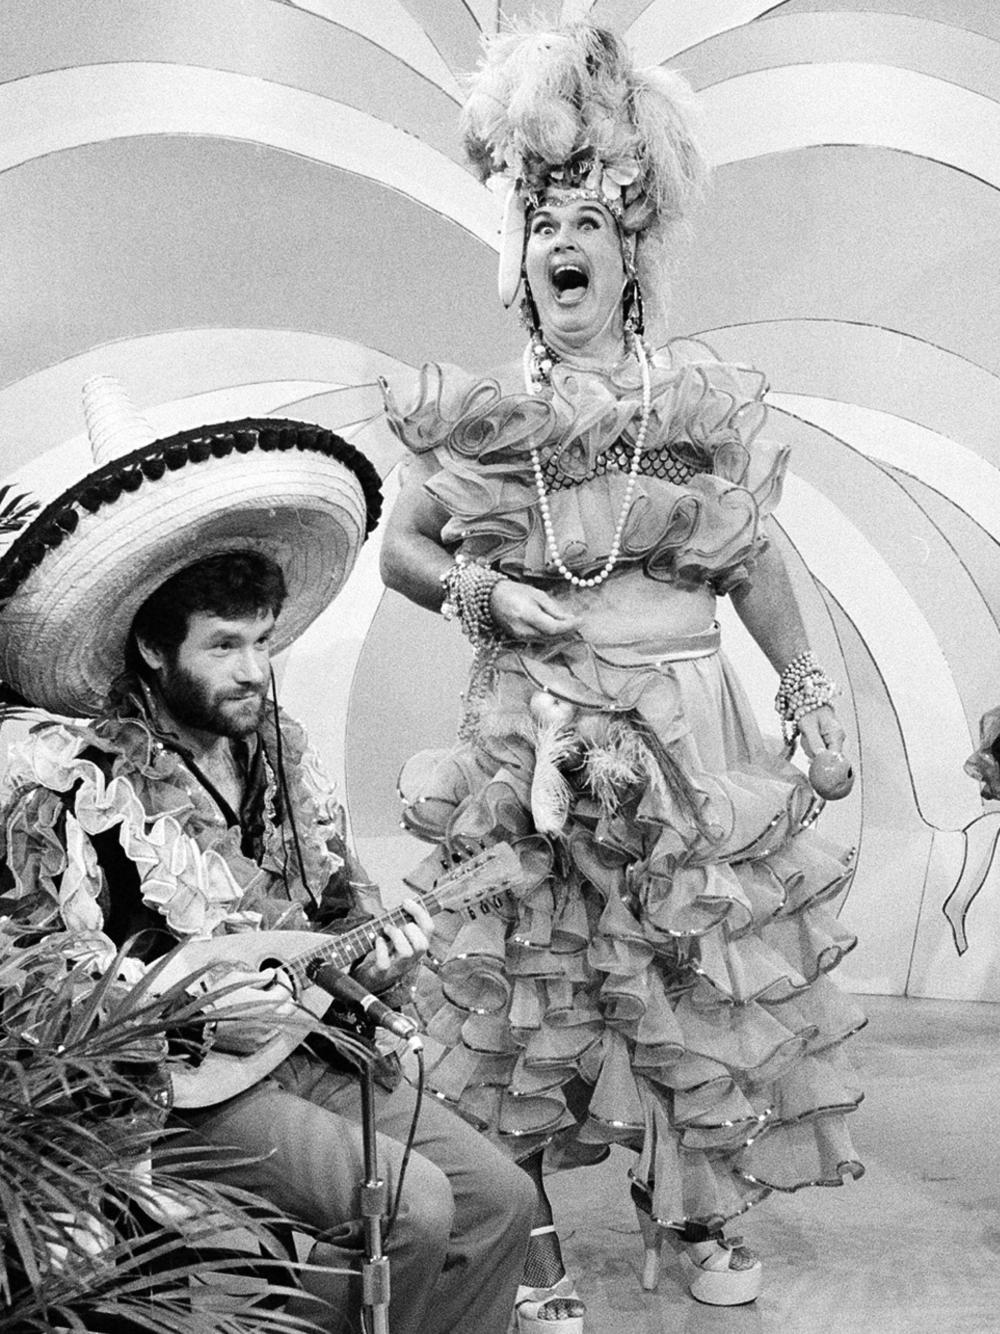 In 1983, Scott delivered <em>Today</em>'s weather report dressed as Brazilian singer Carmen Miranda.